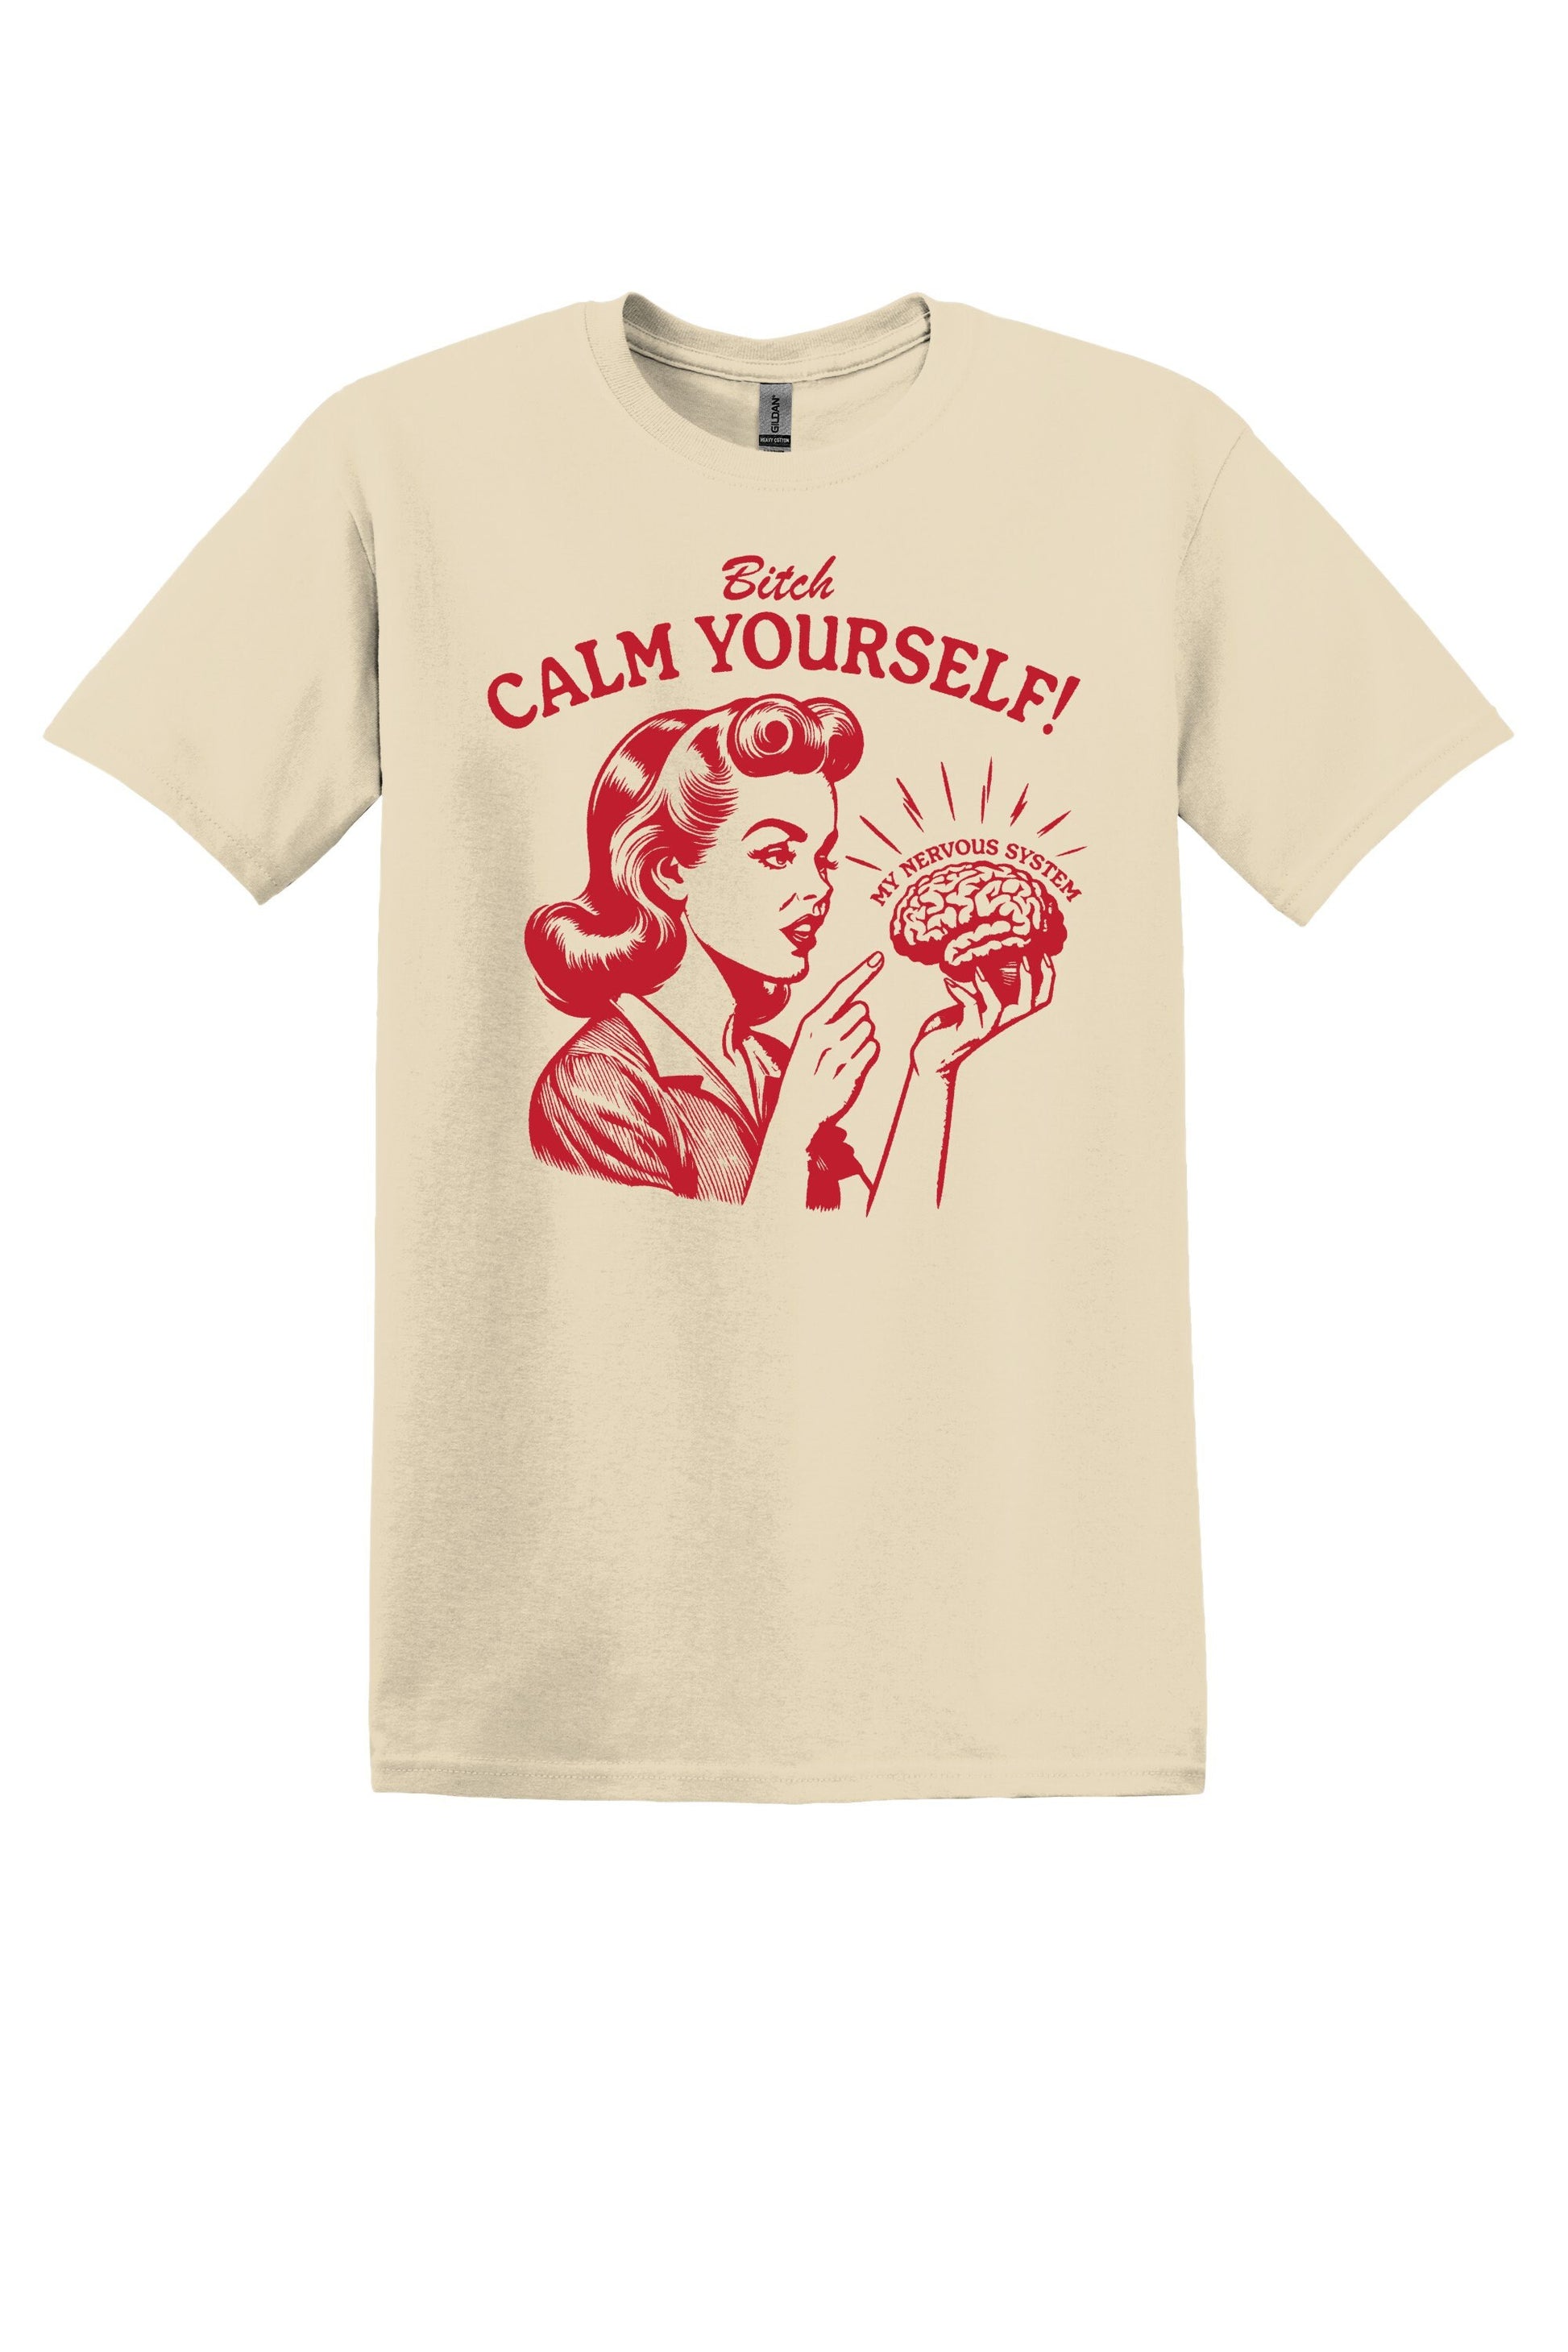 Bitch Calm Yourself My Nervous System Shirt Funny Shirt Mental Heath TShirt Ironic T Shirt Sarcastic Shirt trendy shirt